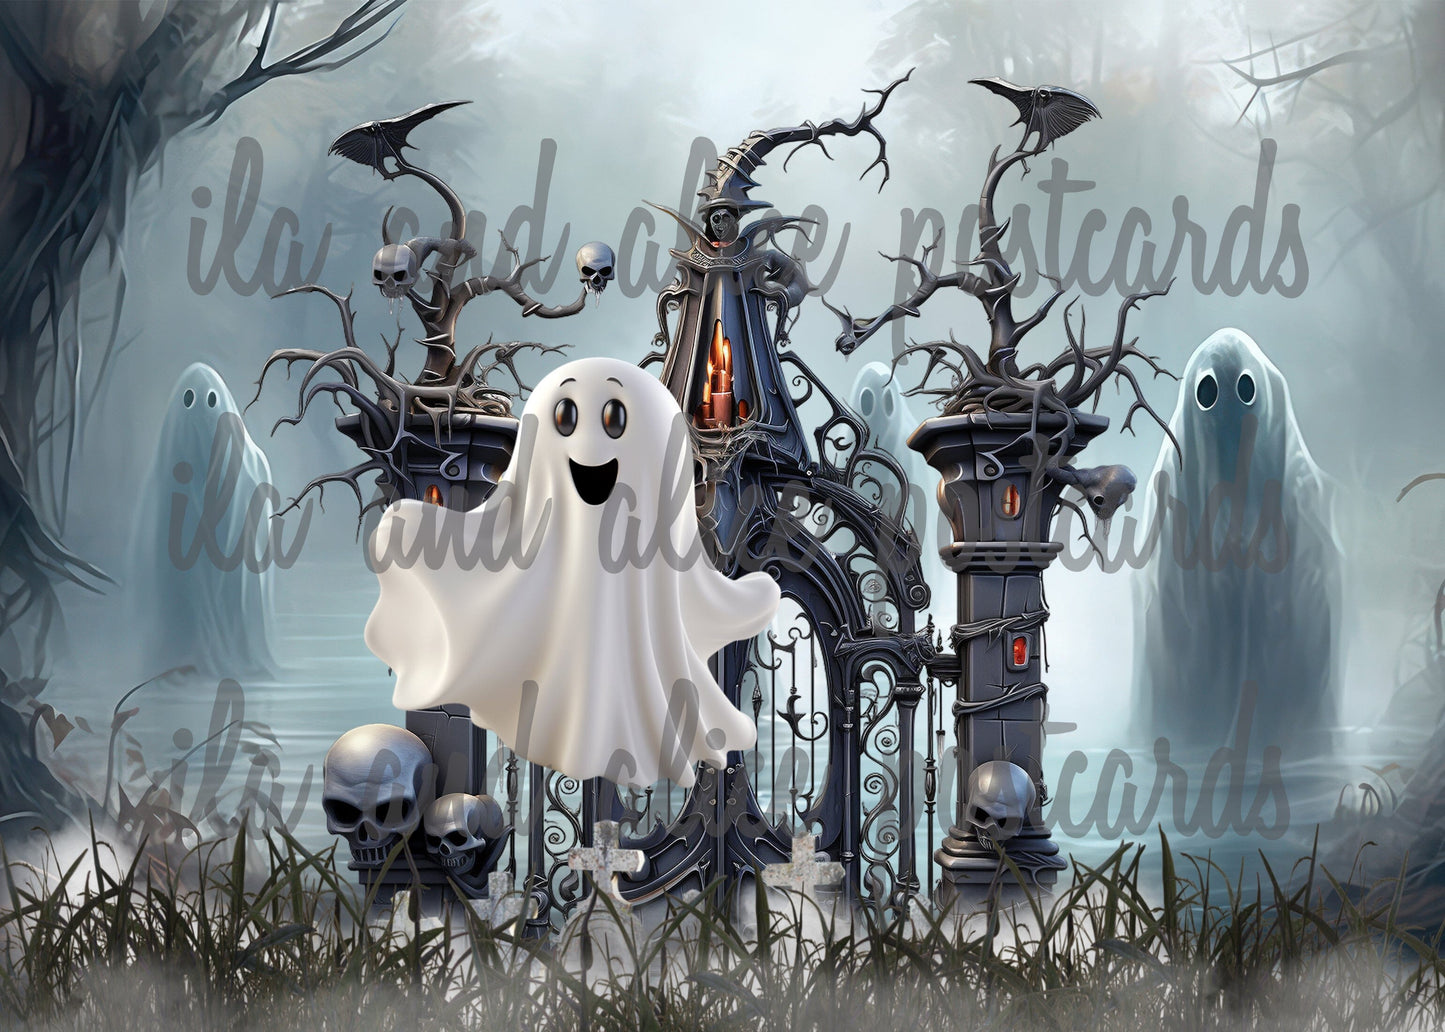 Dark Forest Cuties Halloween Postcards Post Cards ila & alice 